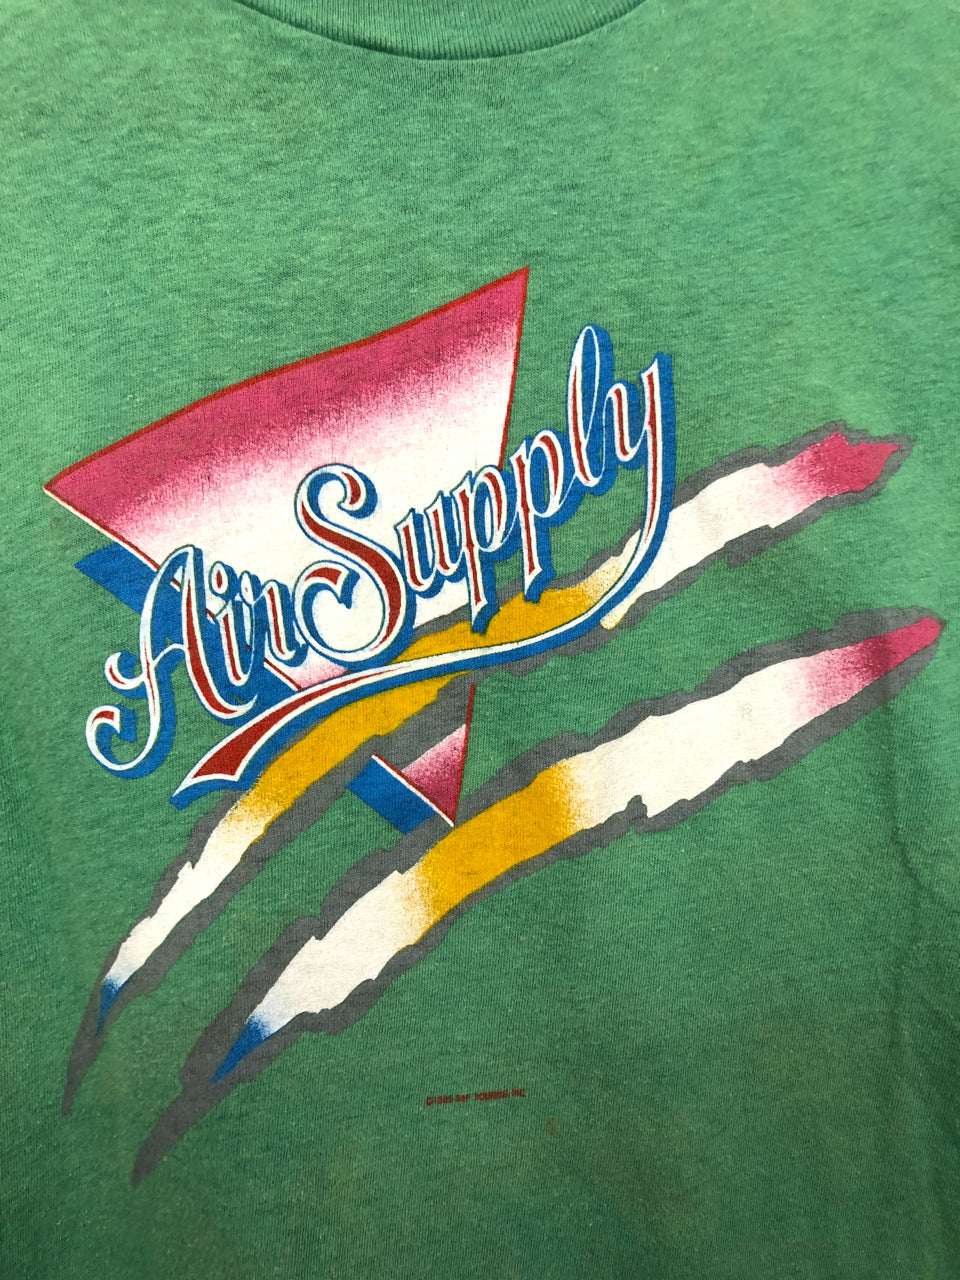 Air Supply The Power of Love Tour 1985 Sleeveless T-Shirt